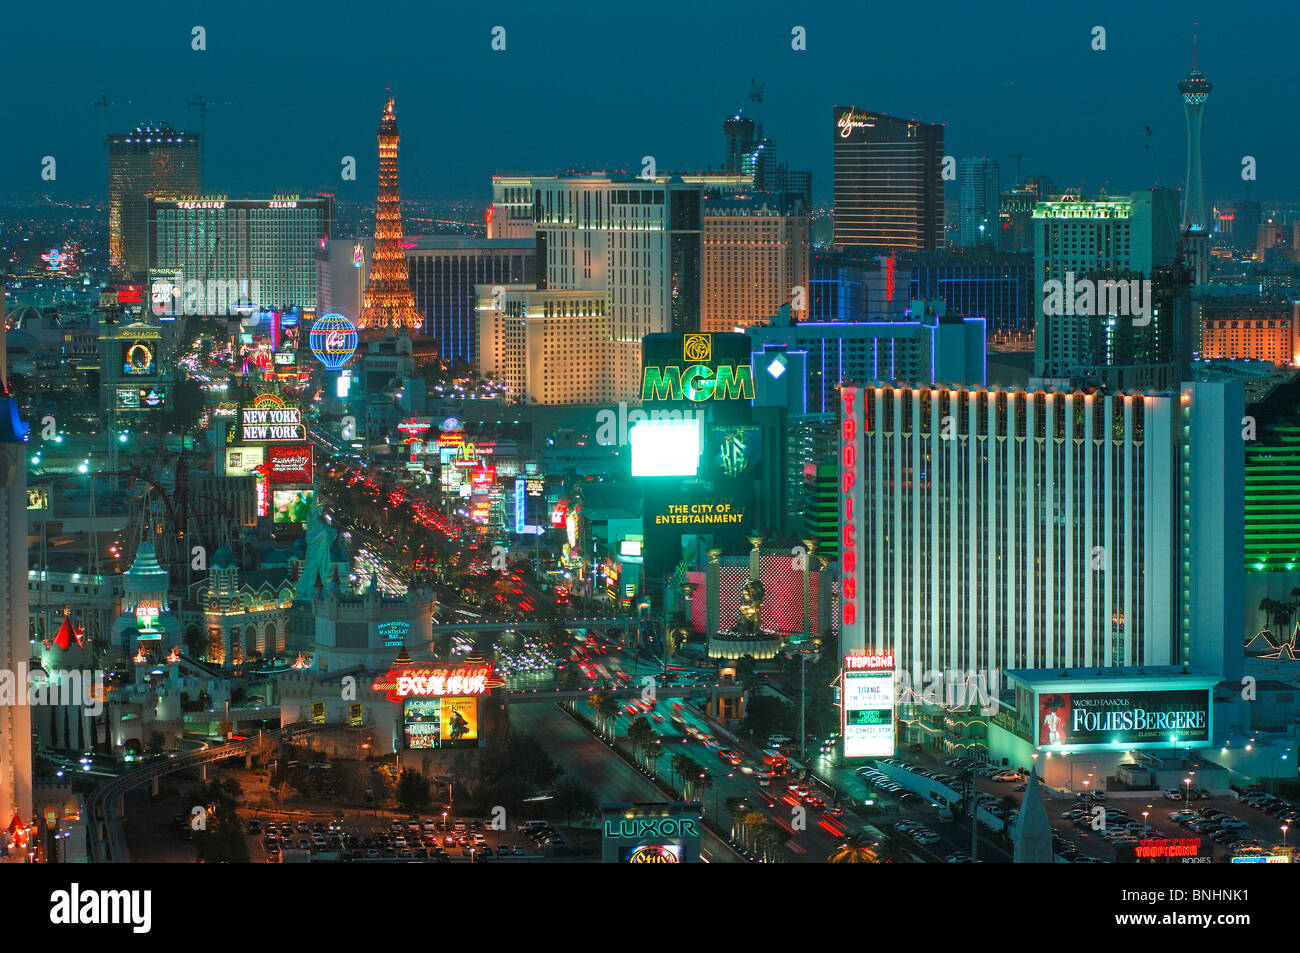 Review: #21038 Las Vegas Skyline (with Mandalay Bay Hotel) - BRICK